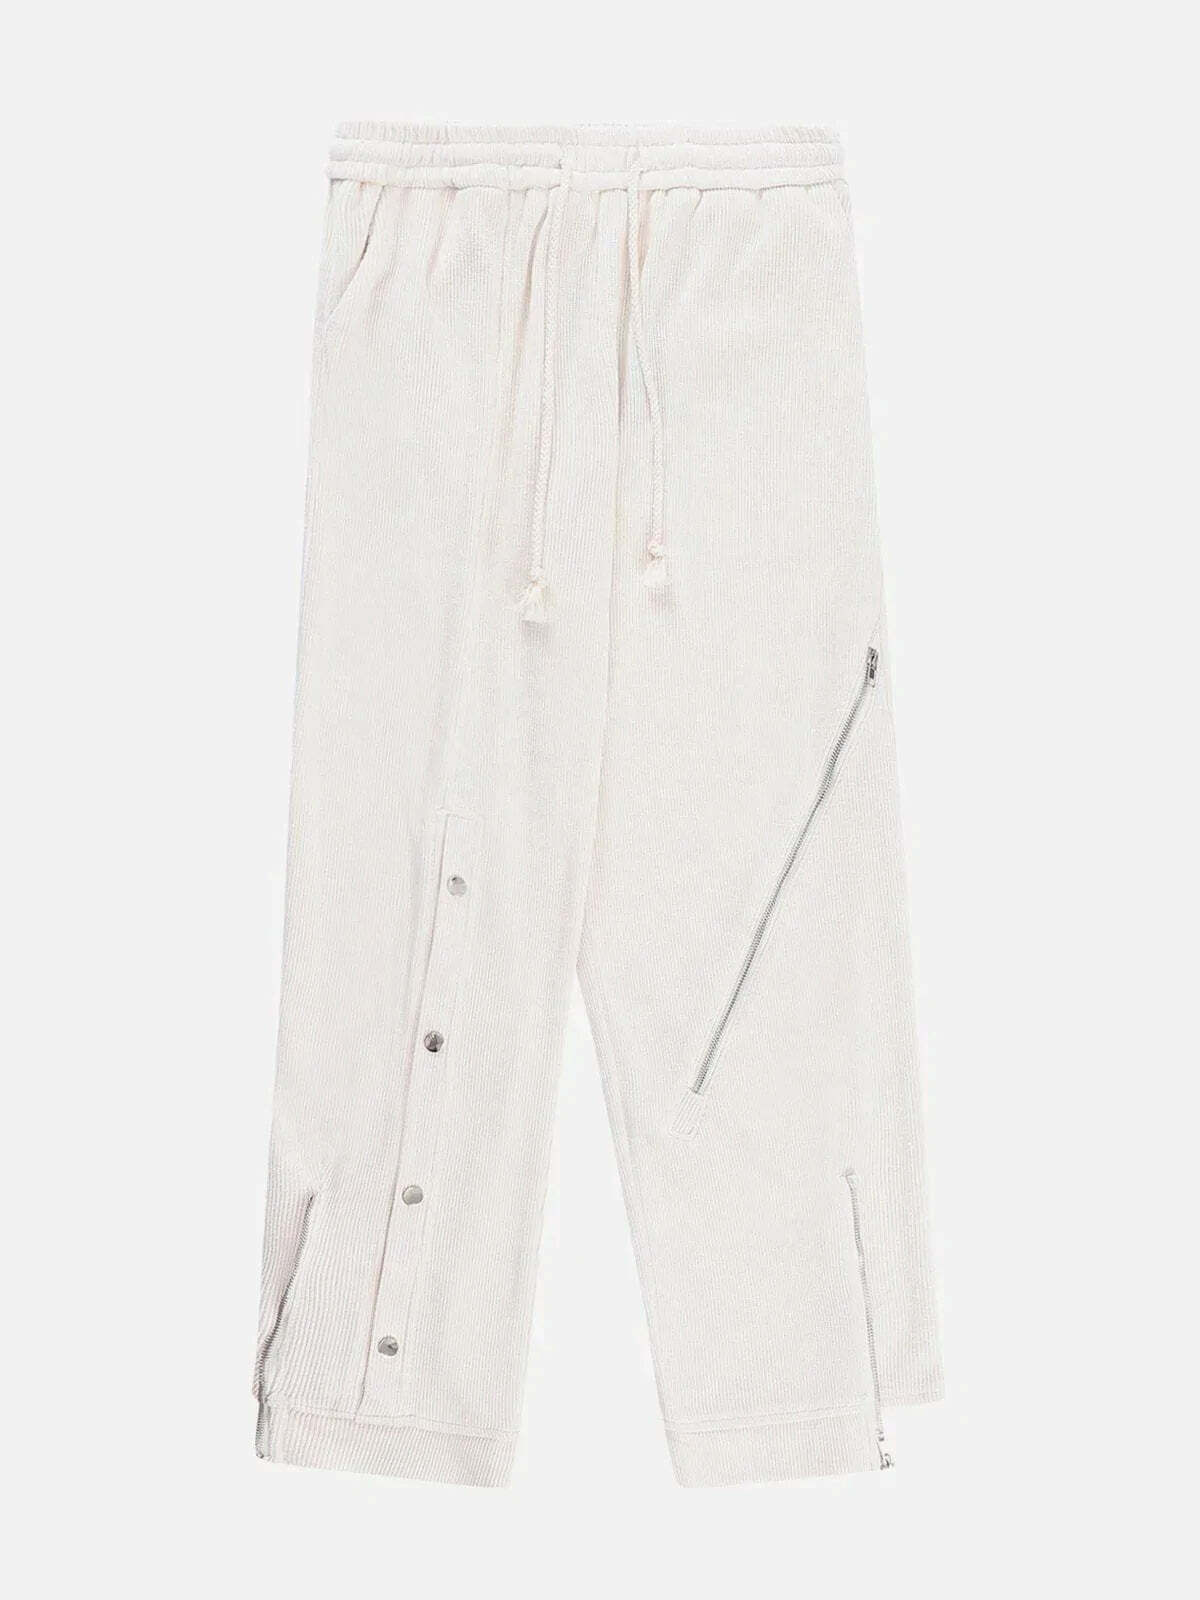 irregular zipper pants edgy & urban streetwear 4525